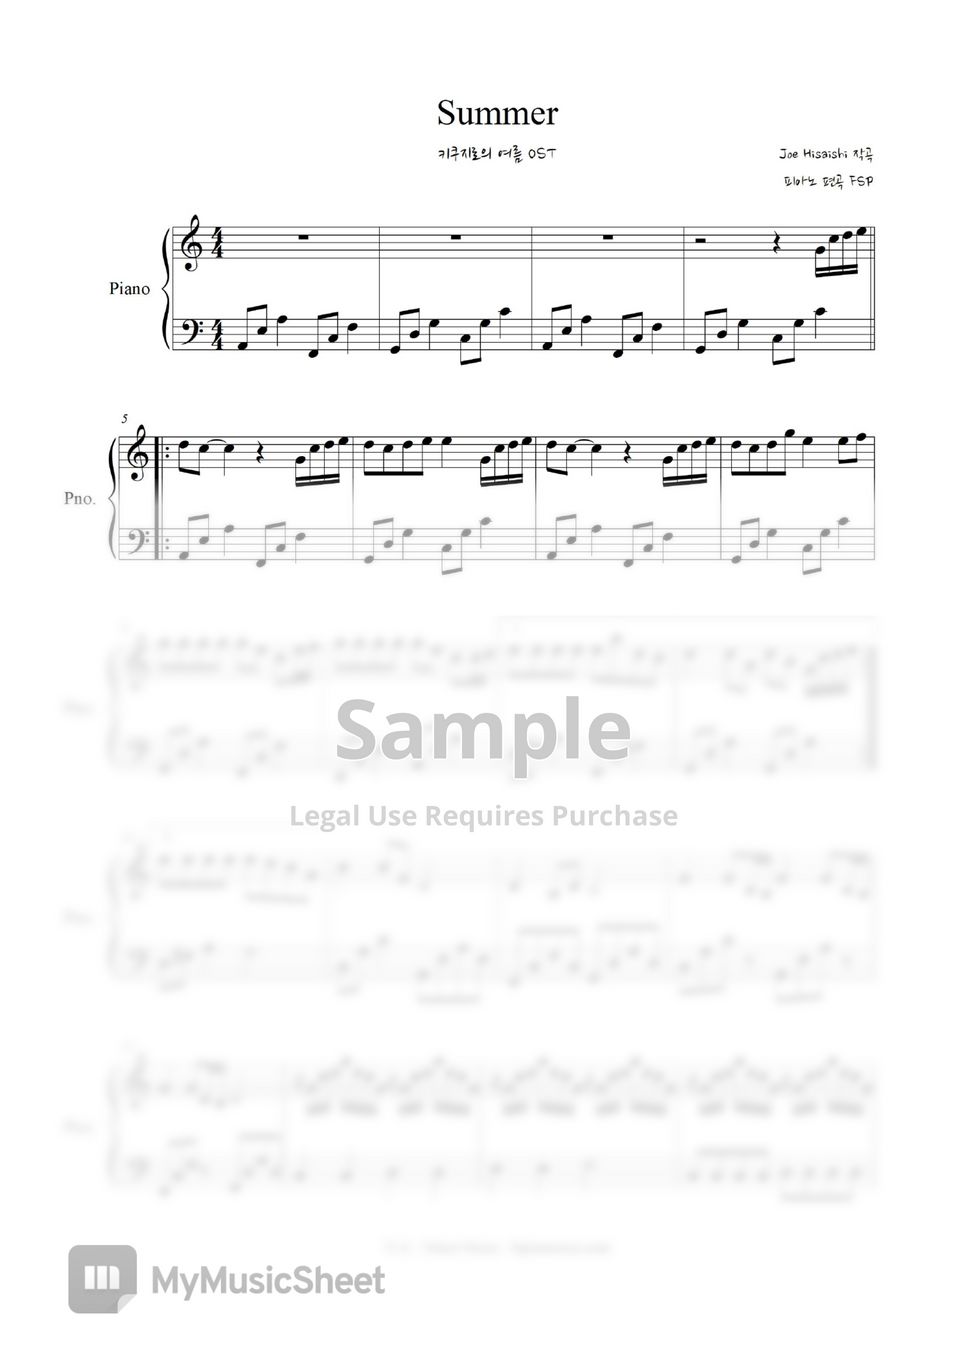 Hisaishi Joe - Summer (very easy) Sheets by freestyle pianoman